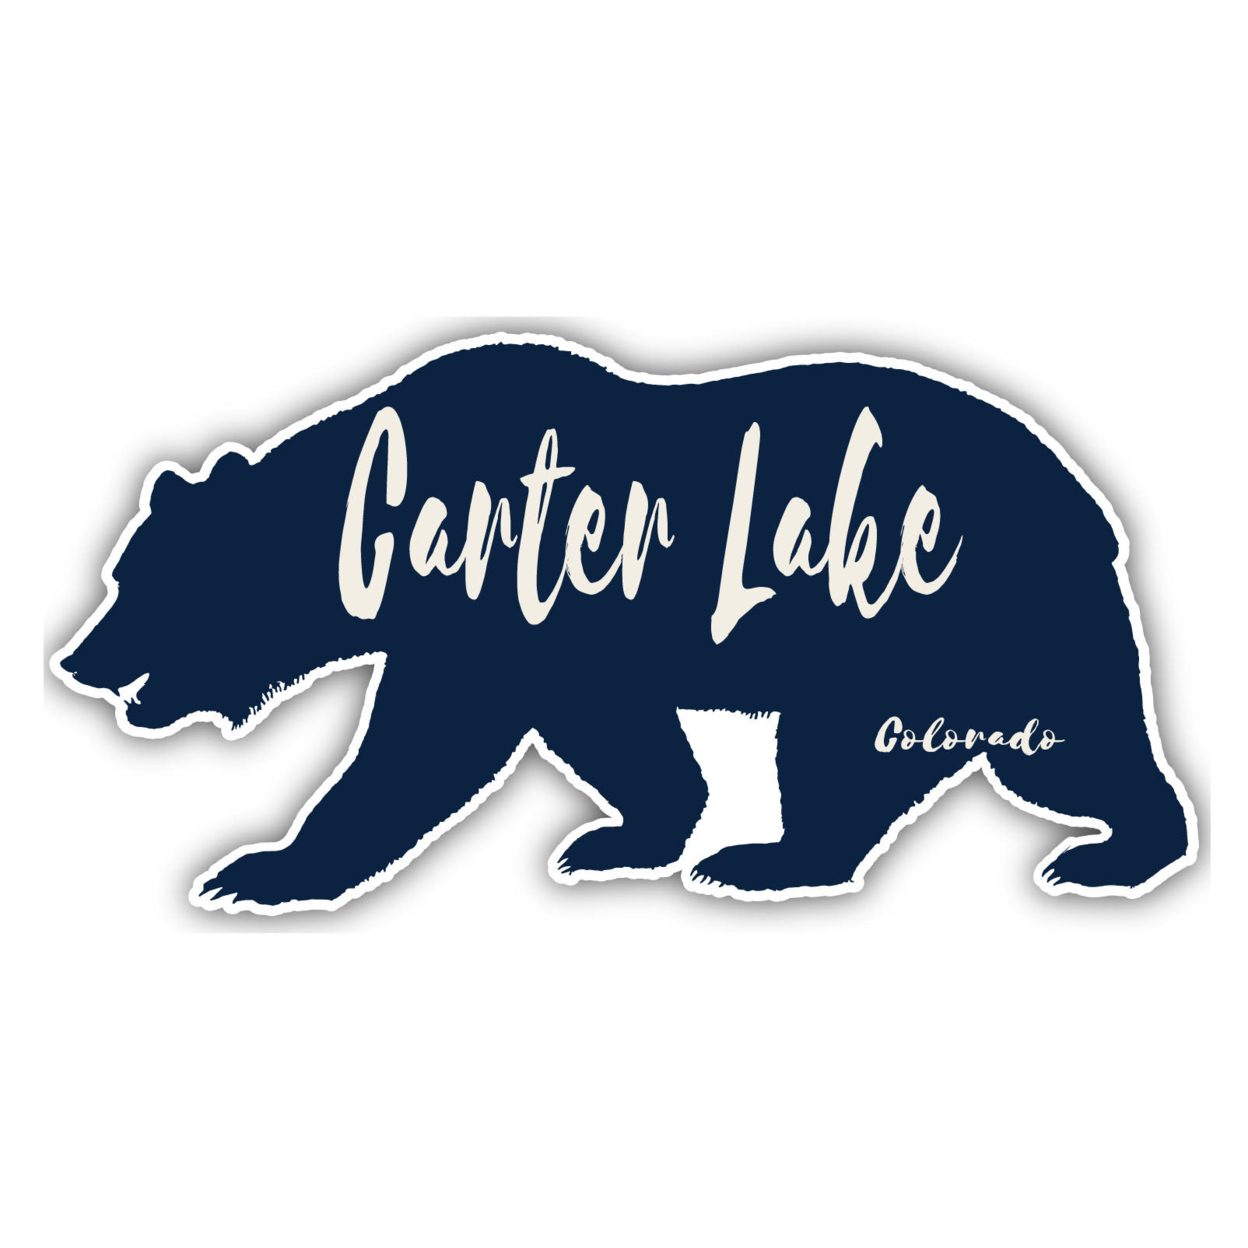 Carter Lake Colorado Souvenir Decorative Stickers (Choose Theme And Size) - Single Unit, 10-Inch, Camp Life